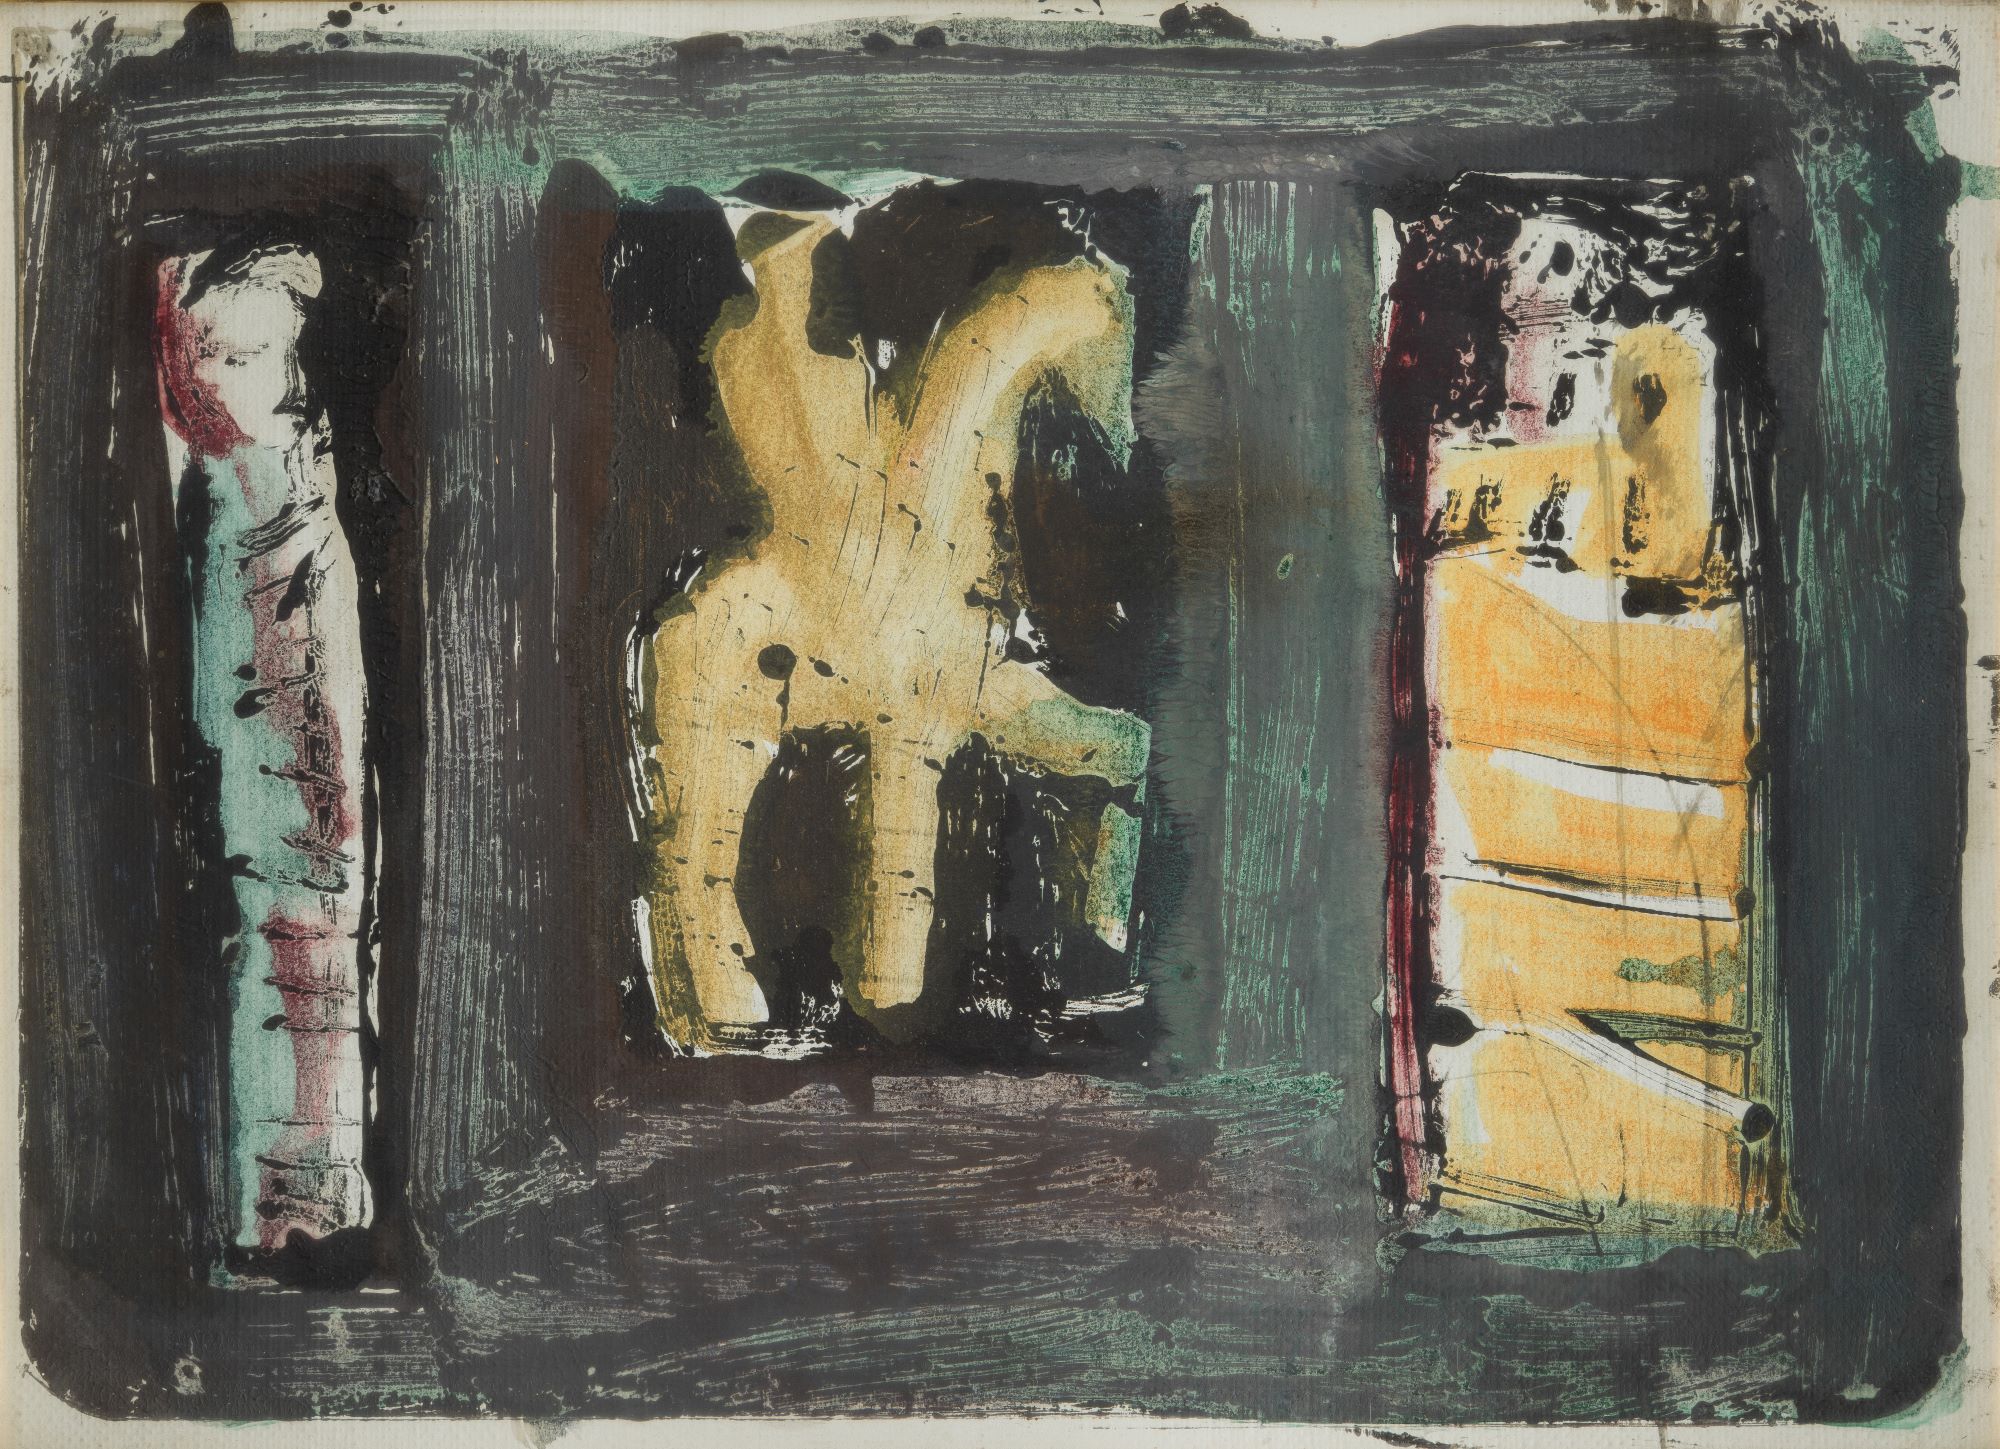 Mario Sironi, Cavallini, 1952, olio, tempera e grafite su carta intelaiata